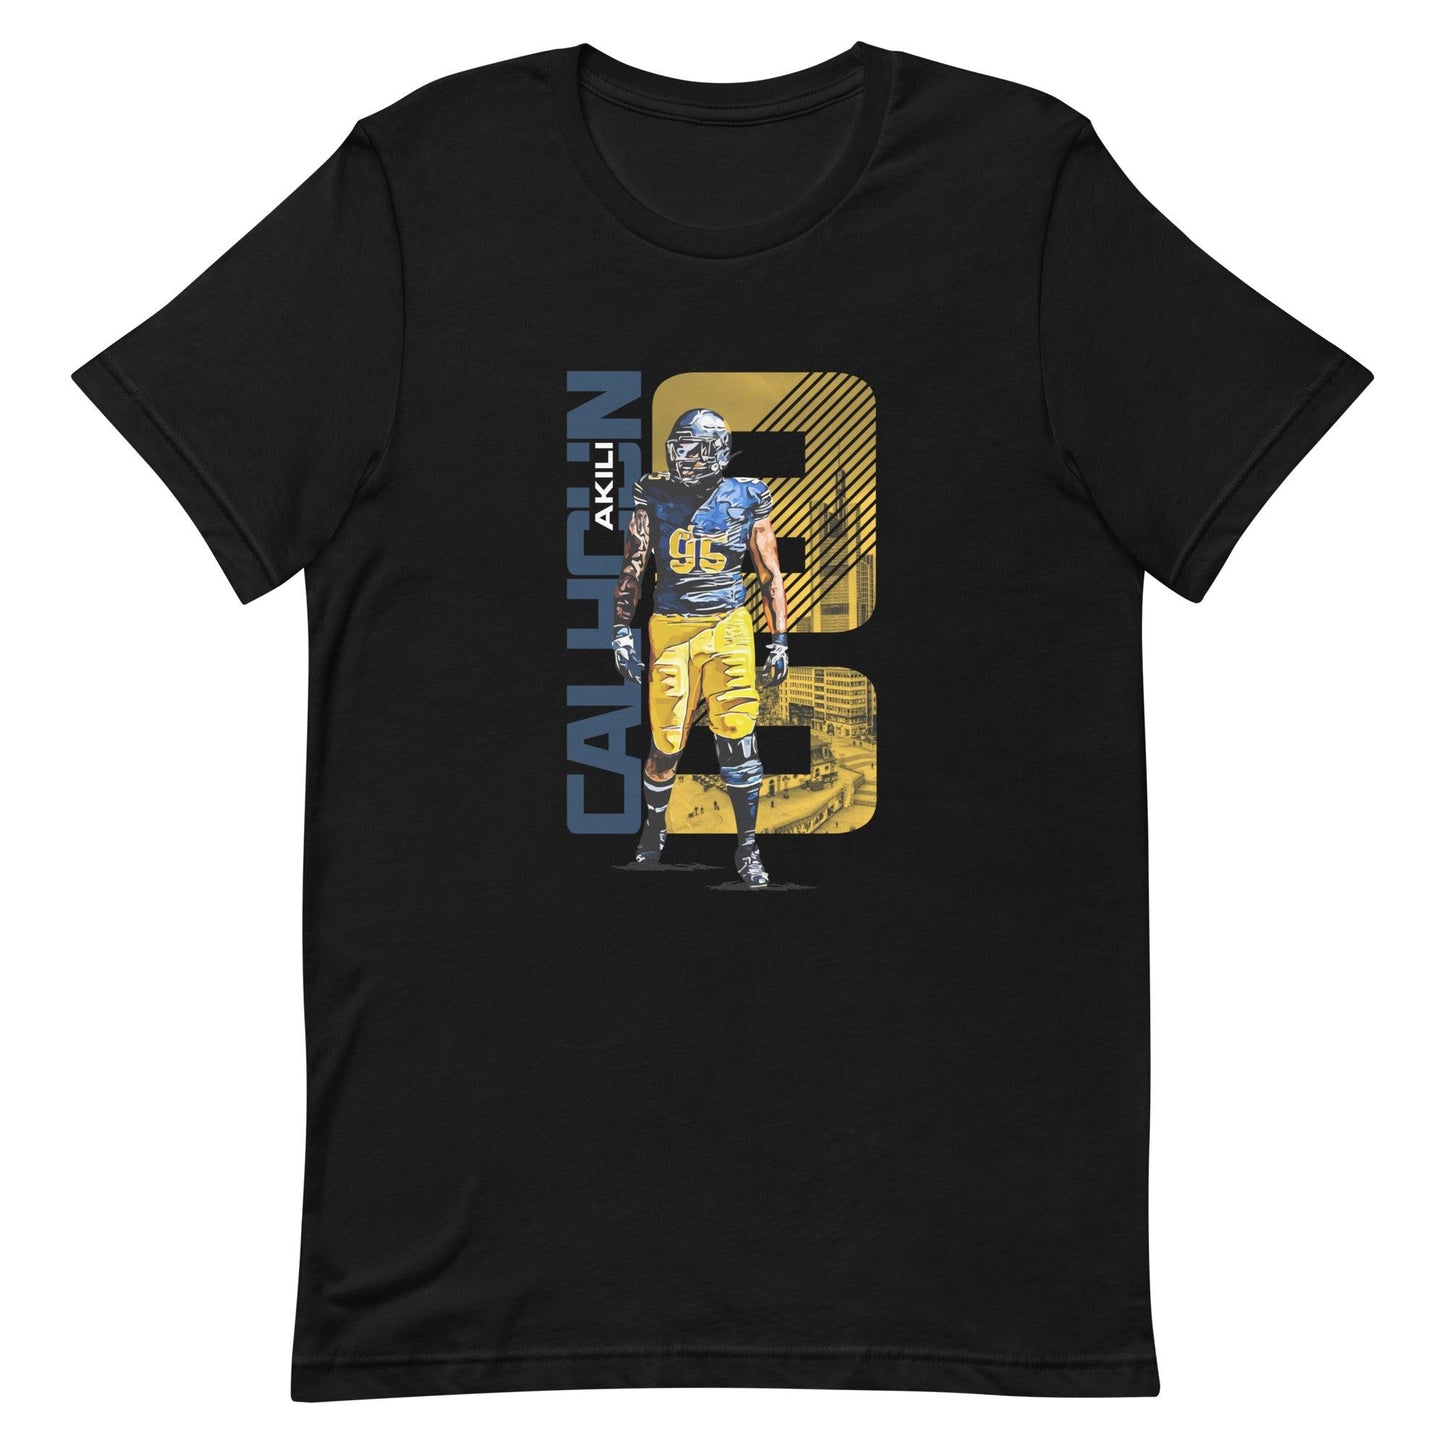 Akili Calhoun Jr. "Gameday" t-shirt - Fan Arch